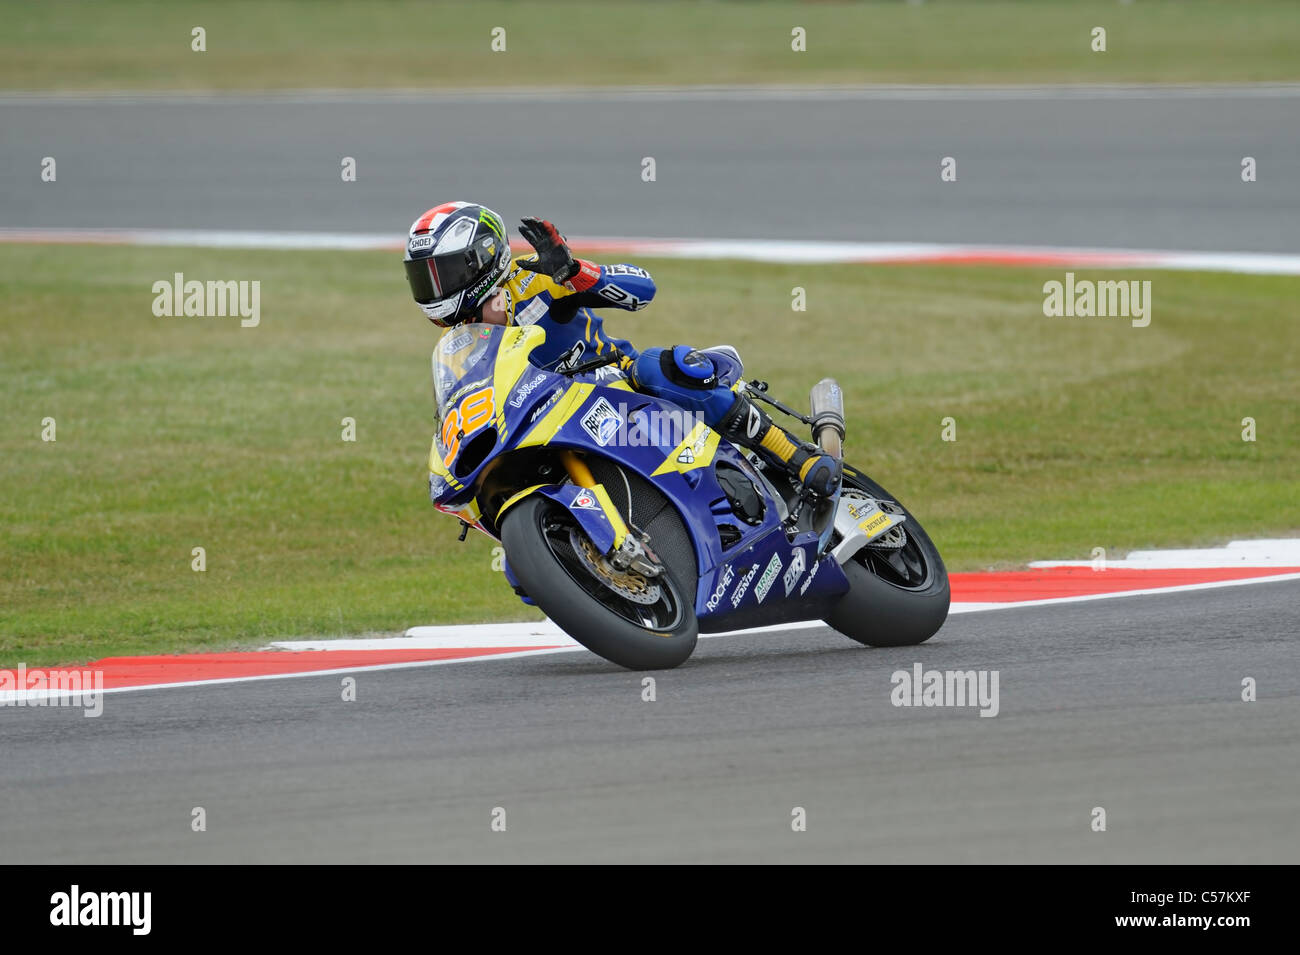 Bradley Smith, moto 2, motociclo, pilota, corridore Foto stock - Alamy